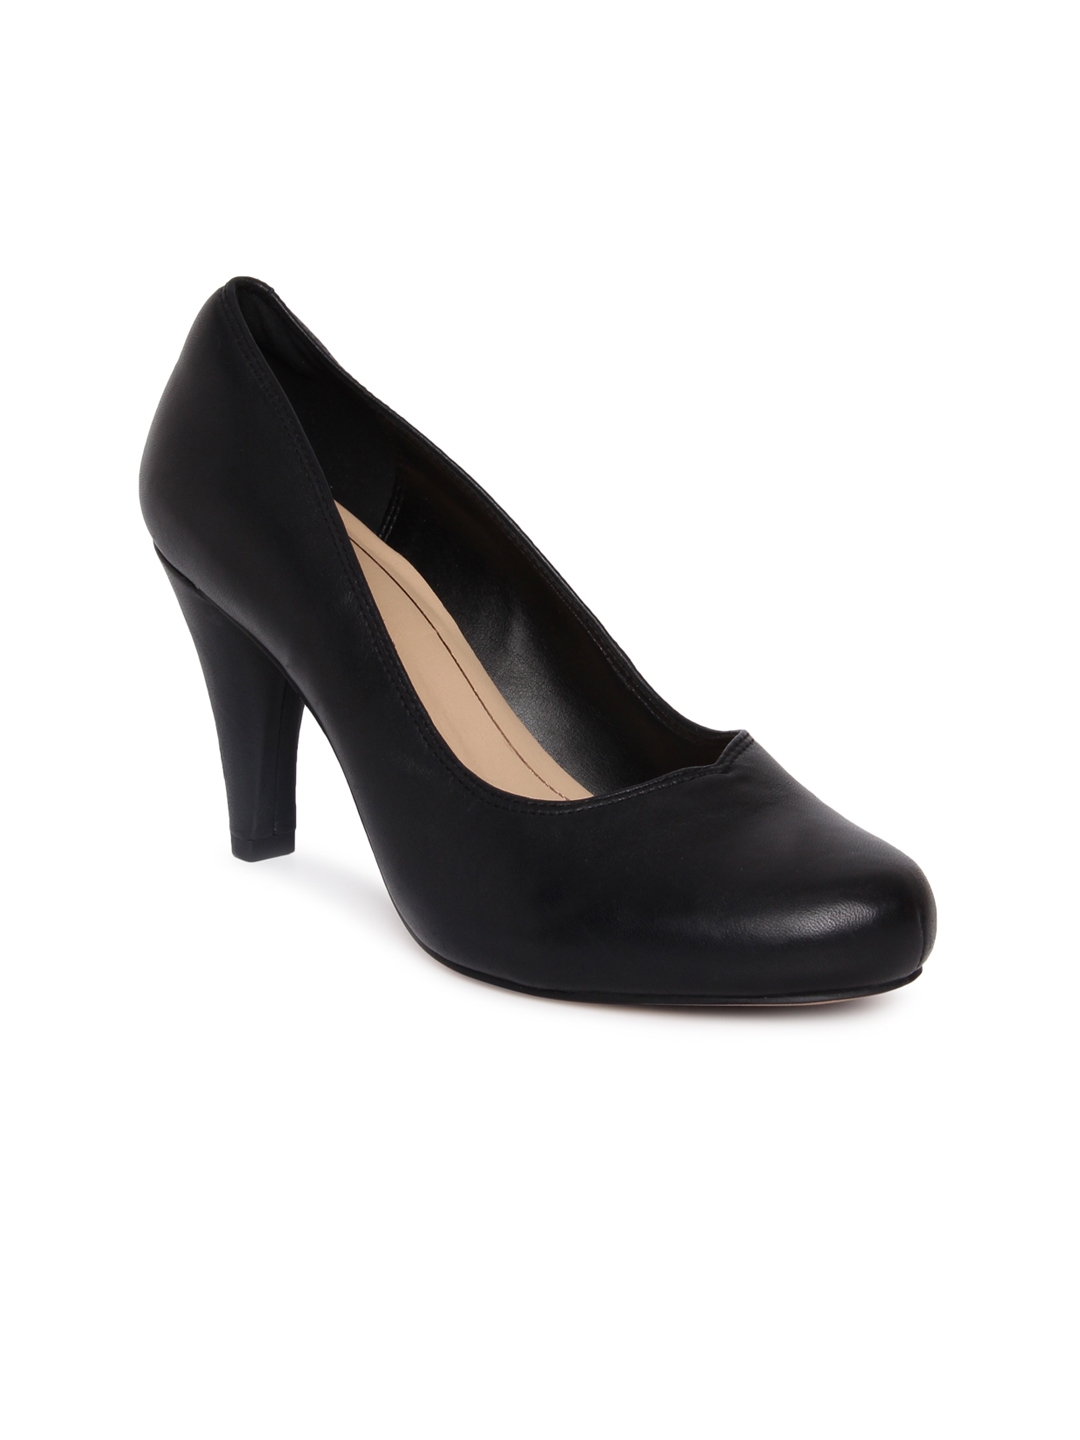 Buy Clarks Women Black Solid Leather Pumps - Heels for Women 8379975 ...